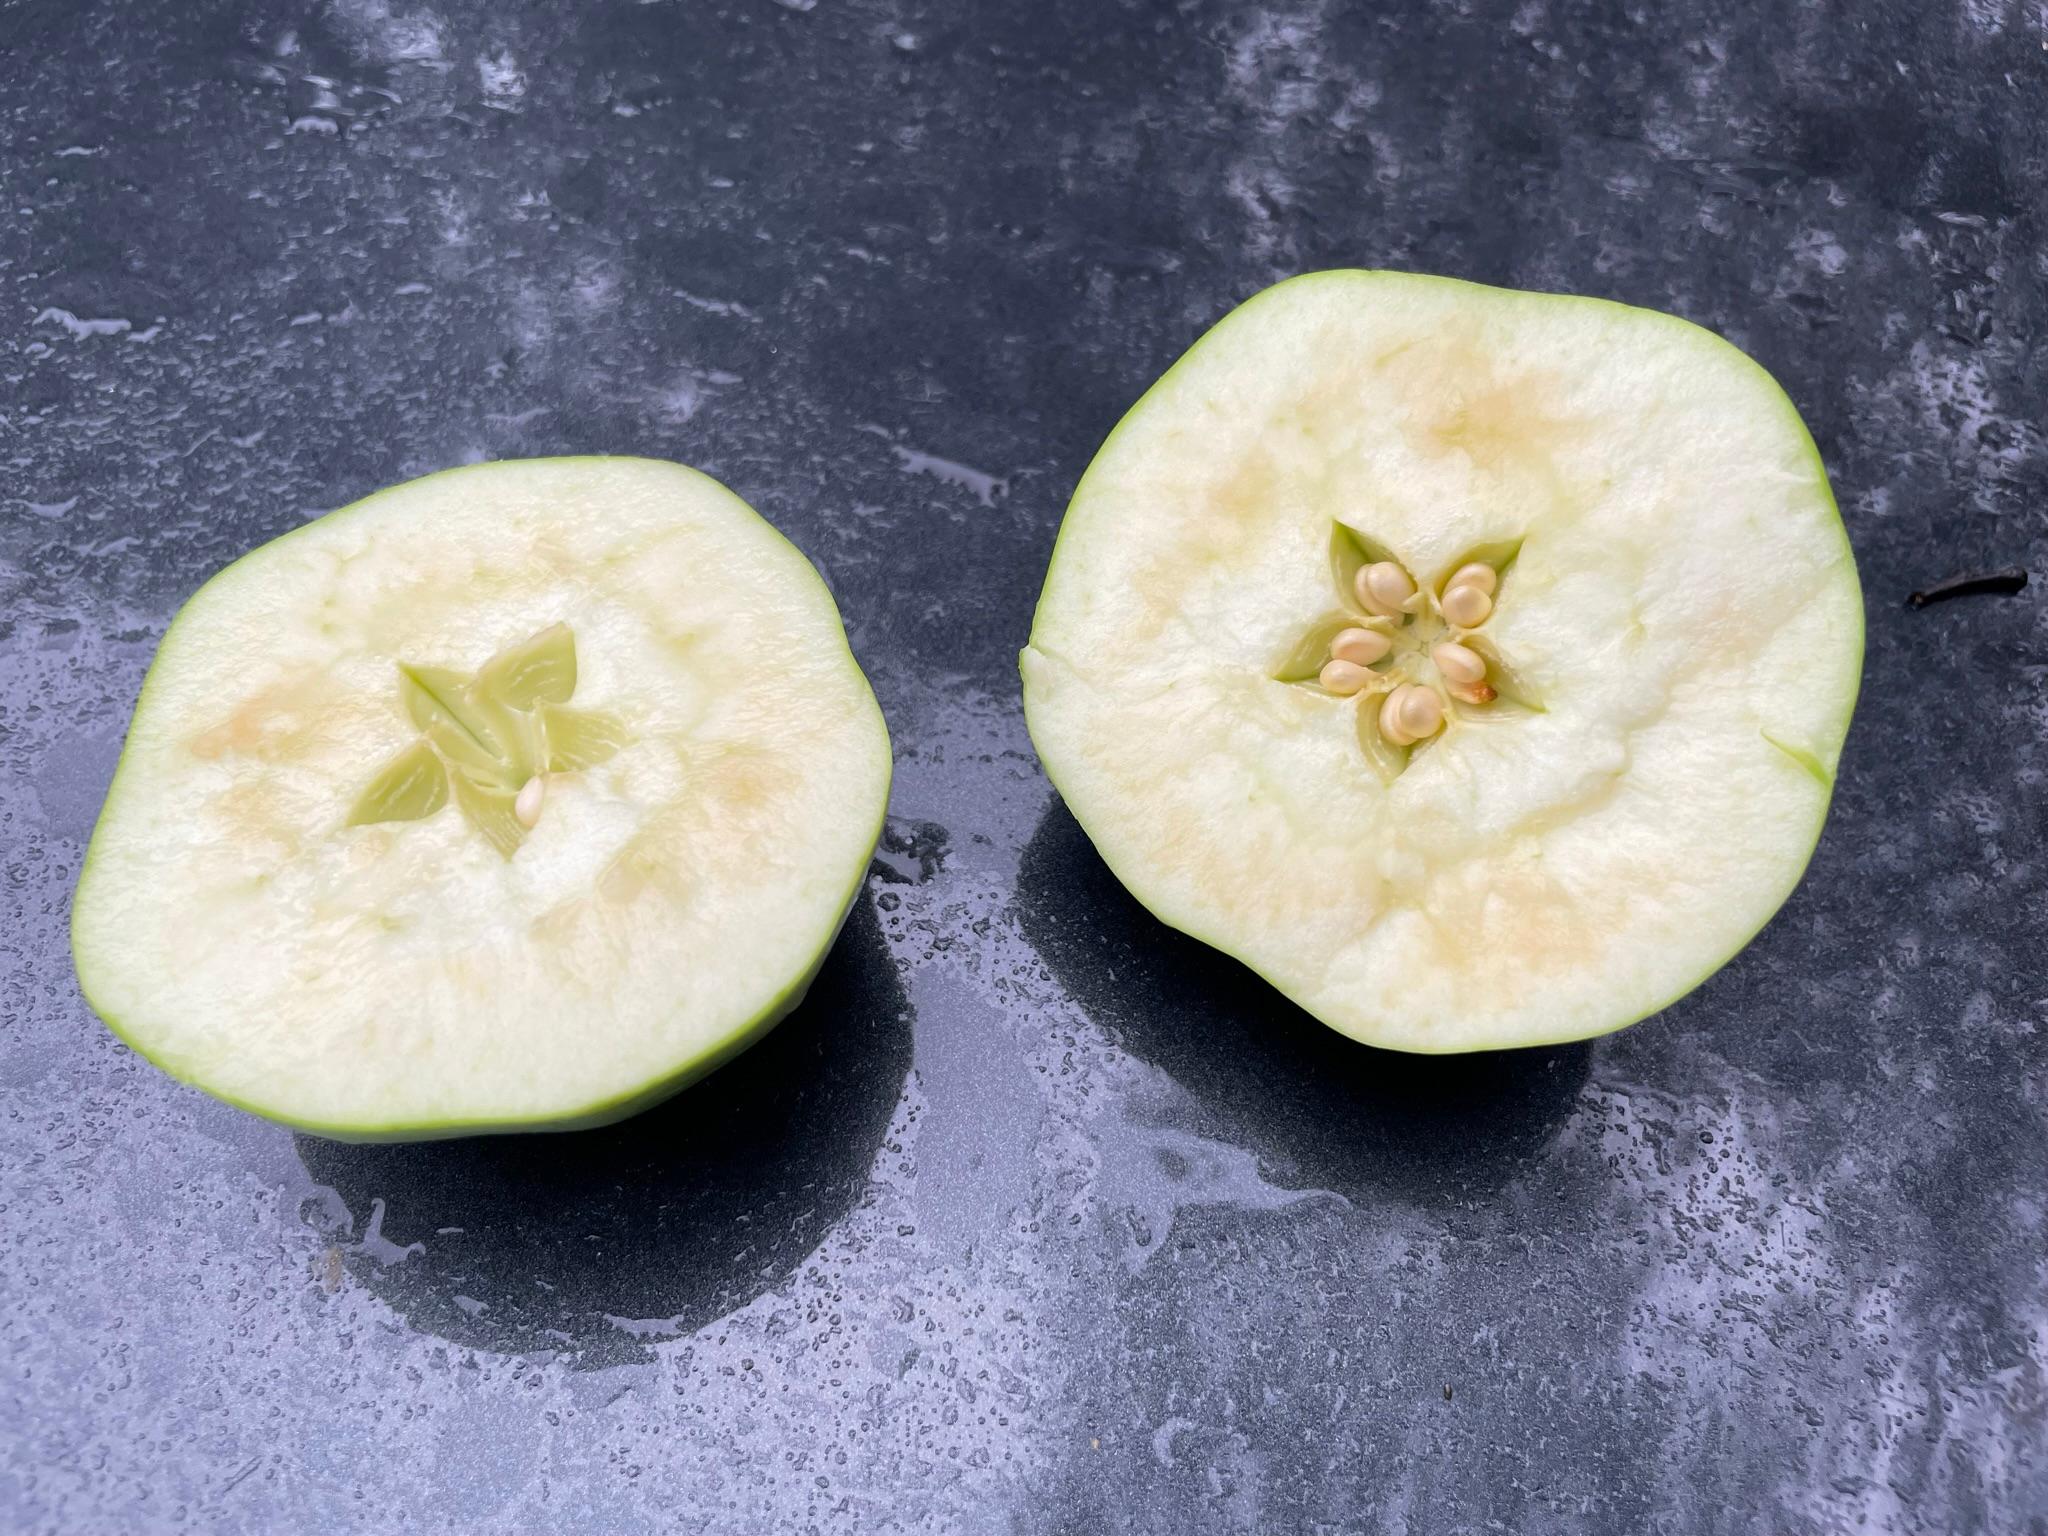 An apple cut in half.